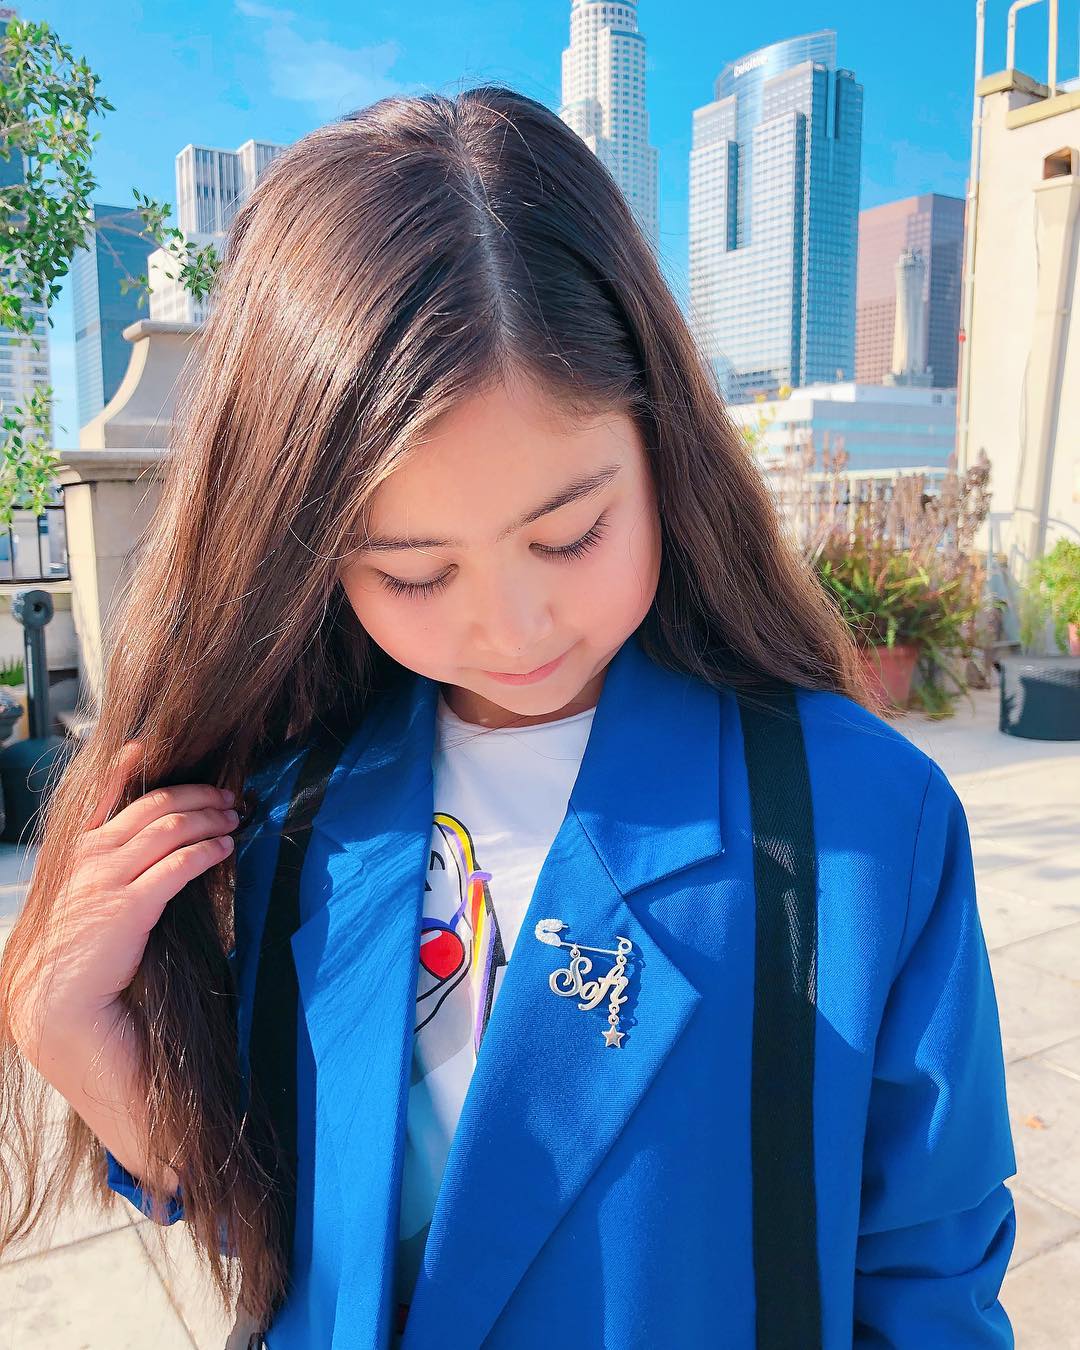 10-летняя Софи Манасян из Алматы снимается на телеканале Nickelodeon